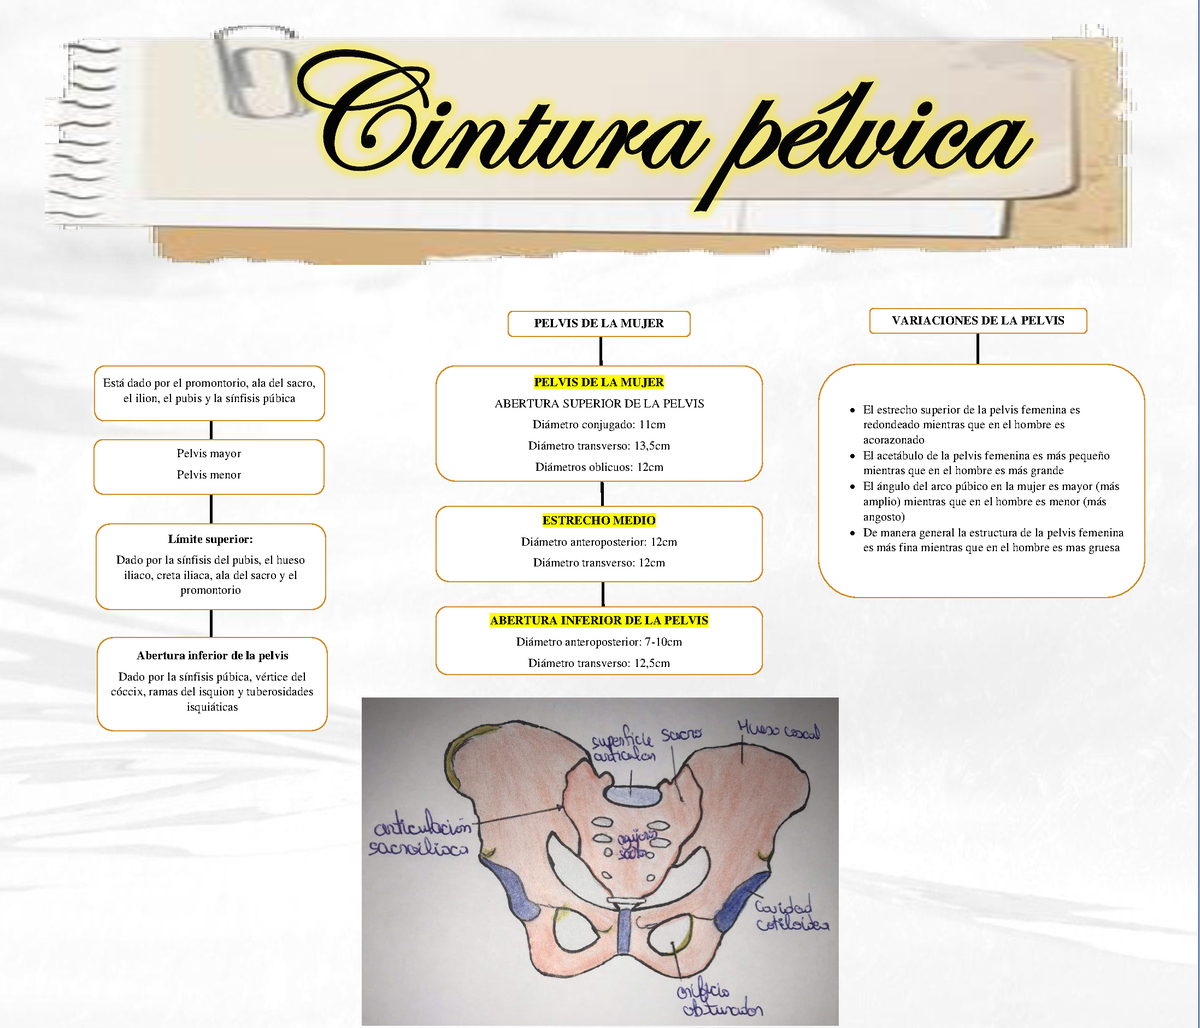 SOLUTION: Cintura pelvica dra cifuentes - Studypool